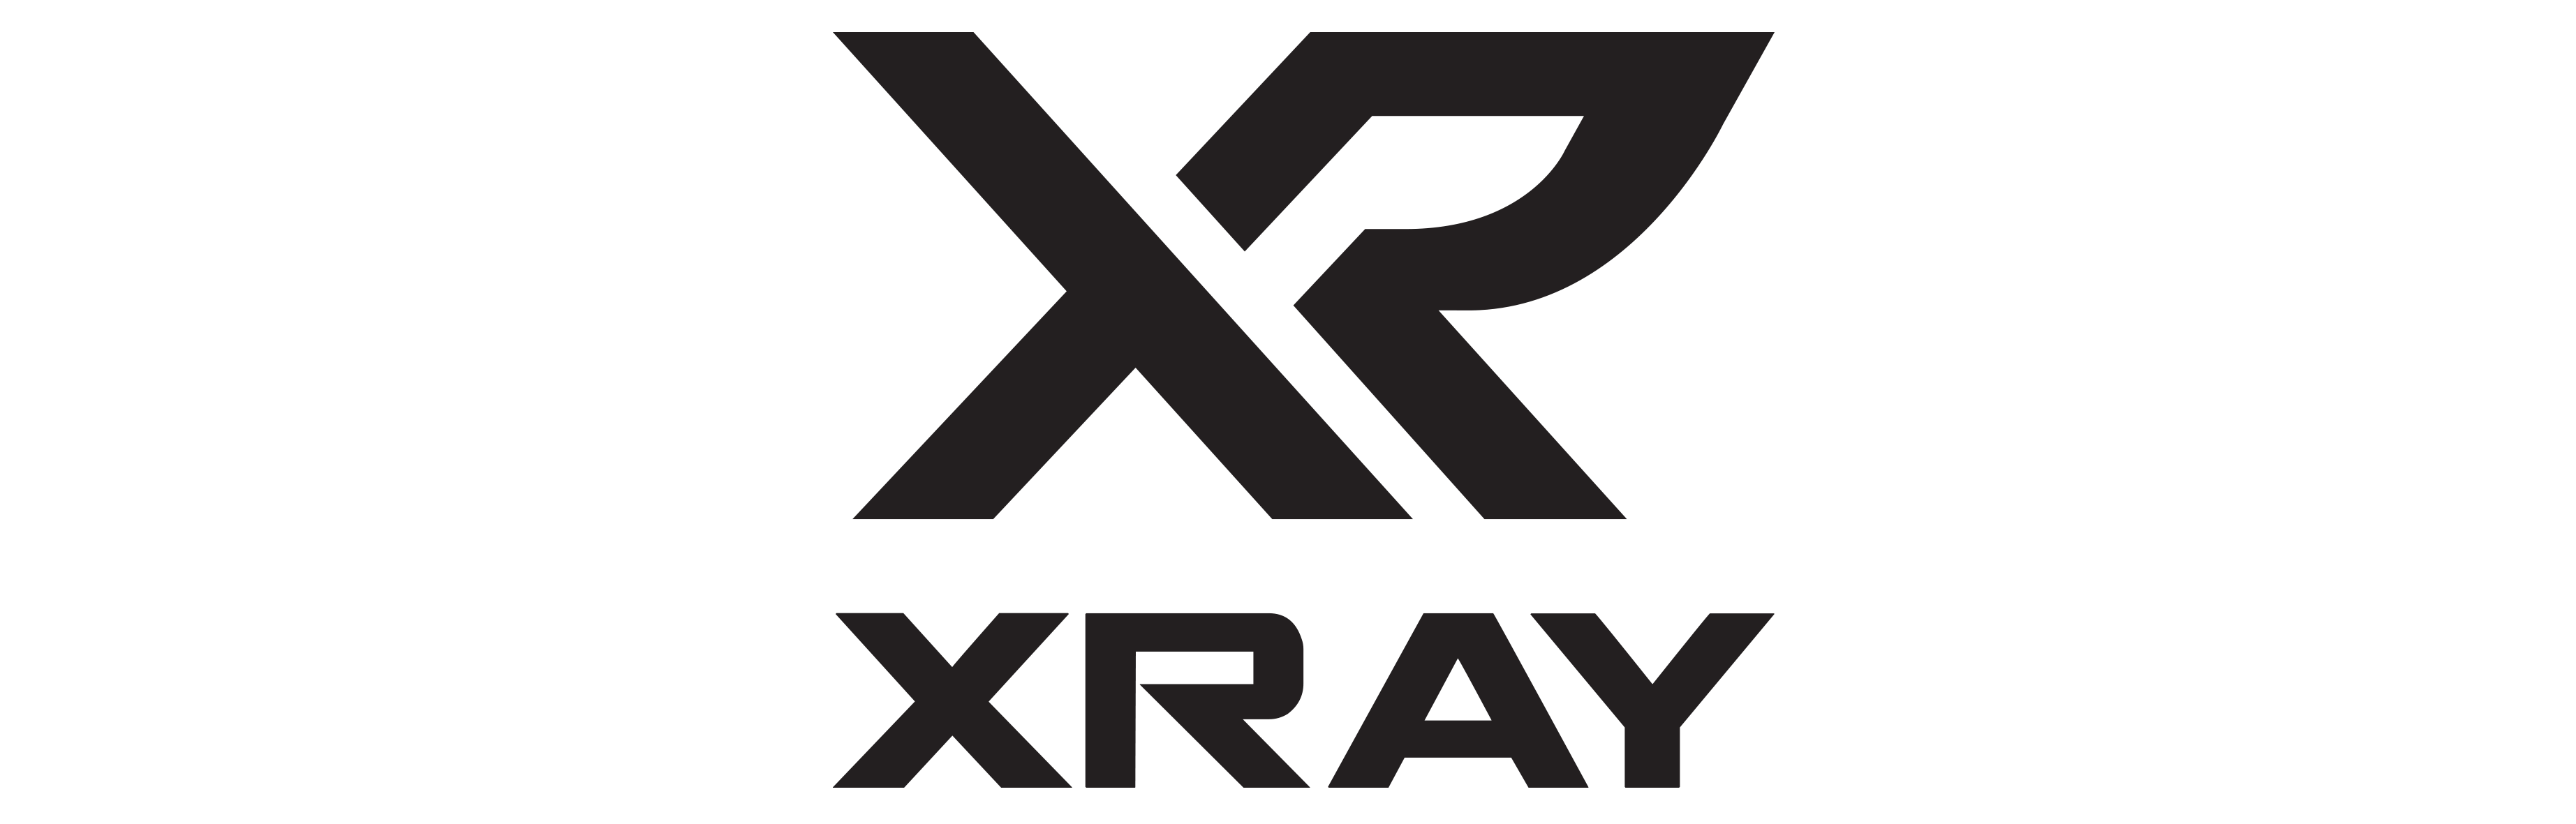 Xray Footwear Coupon Codes